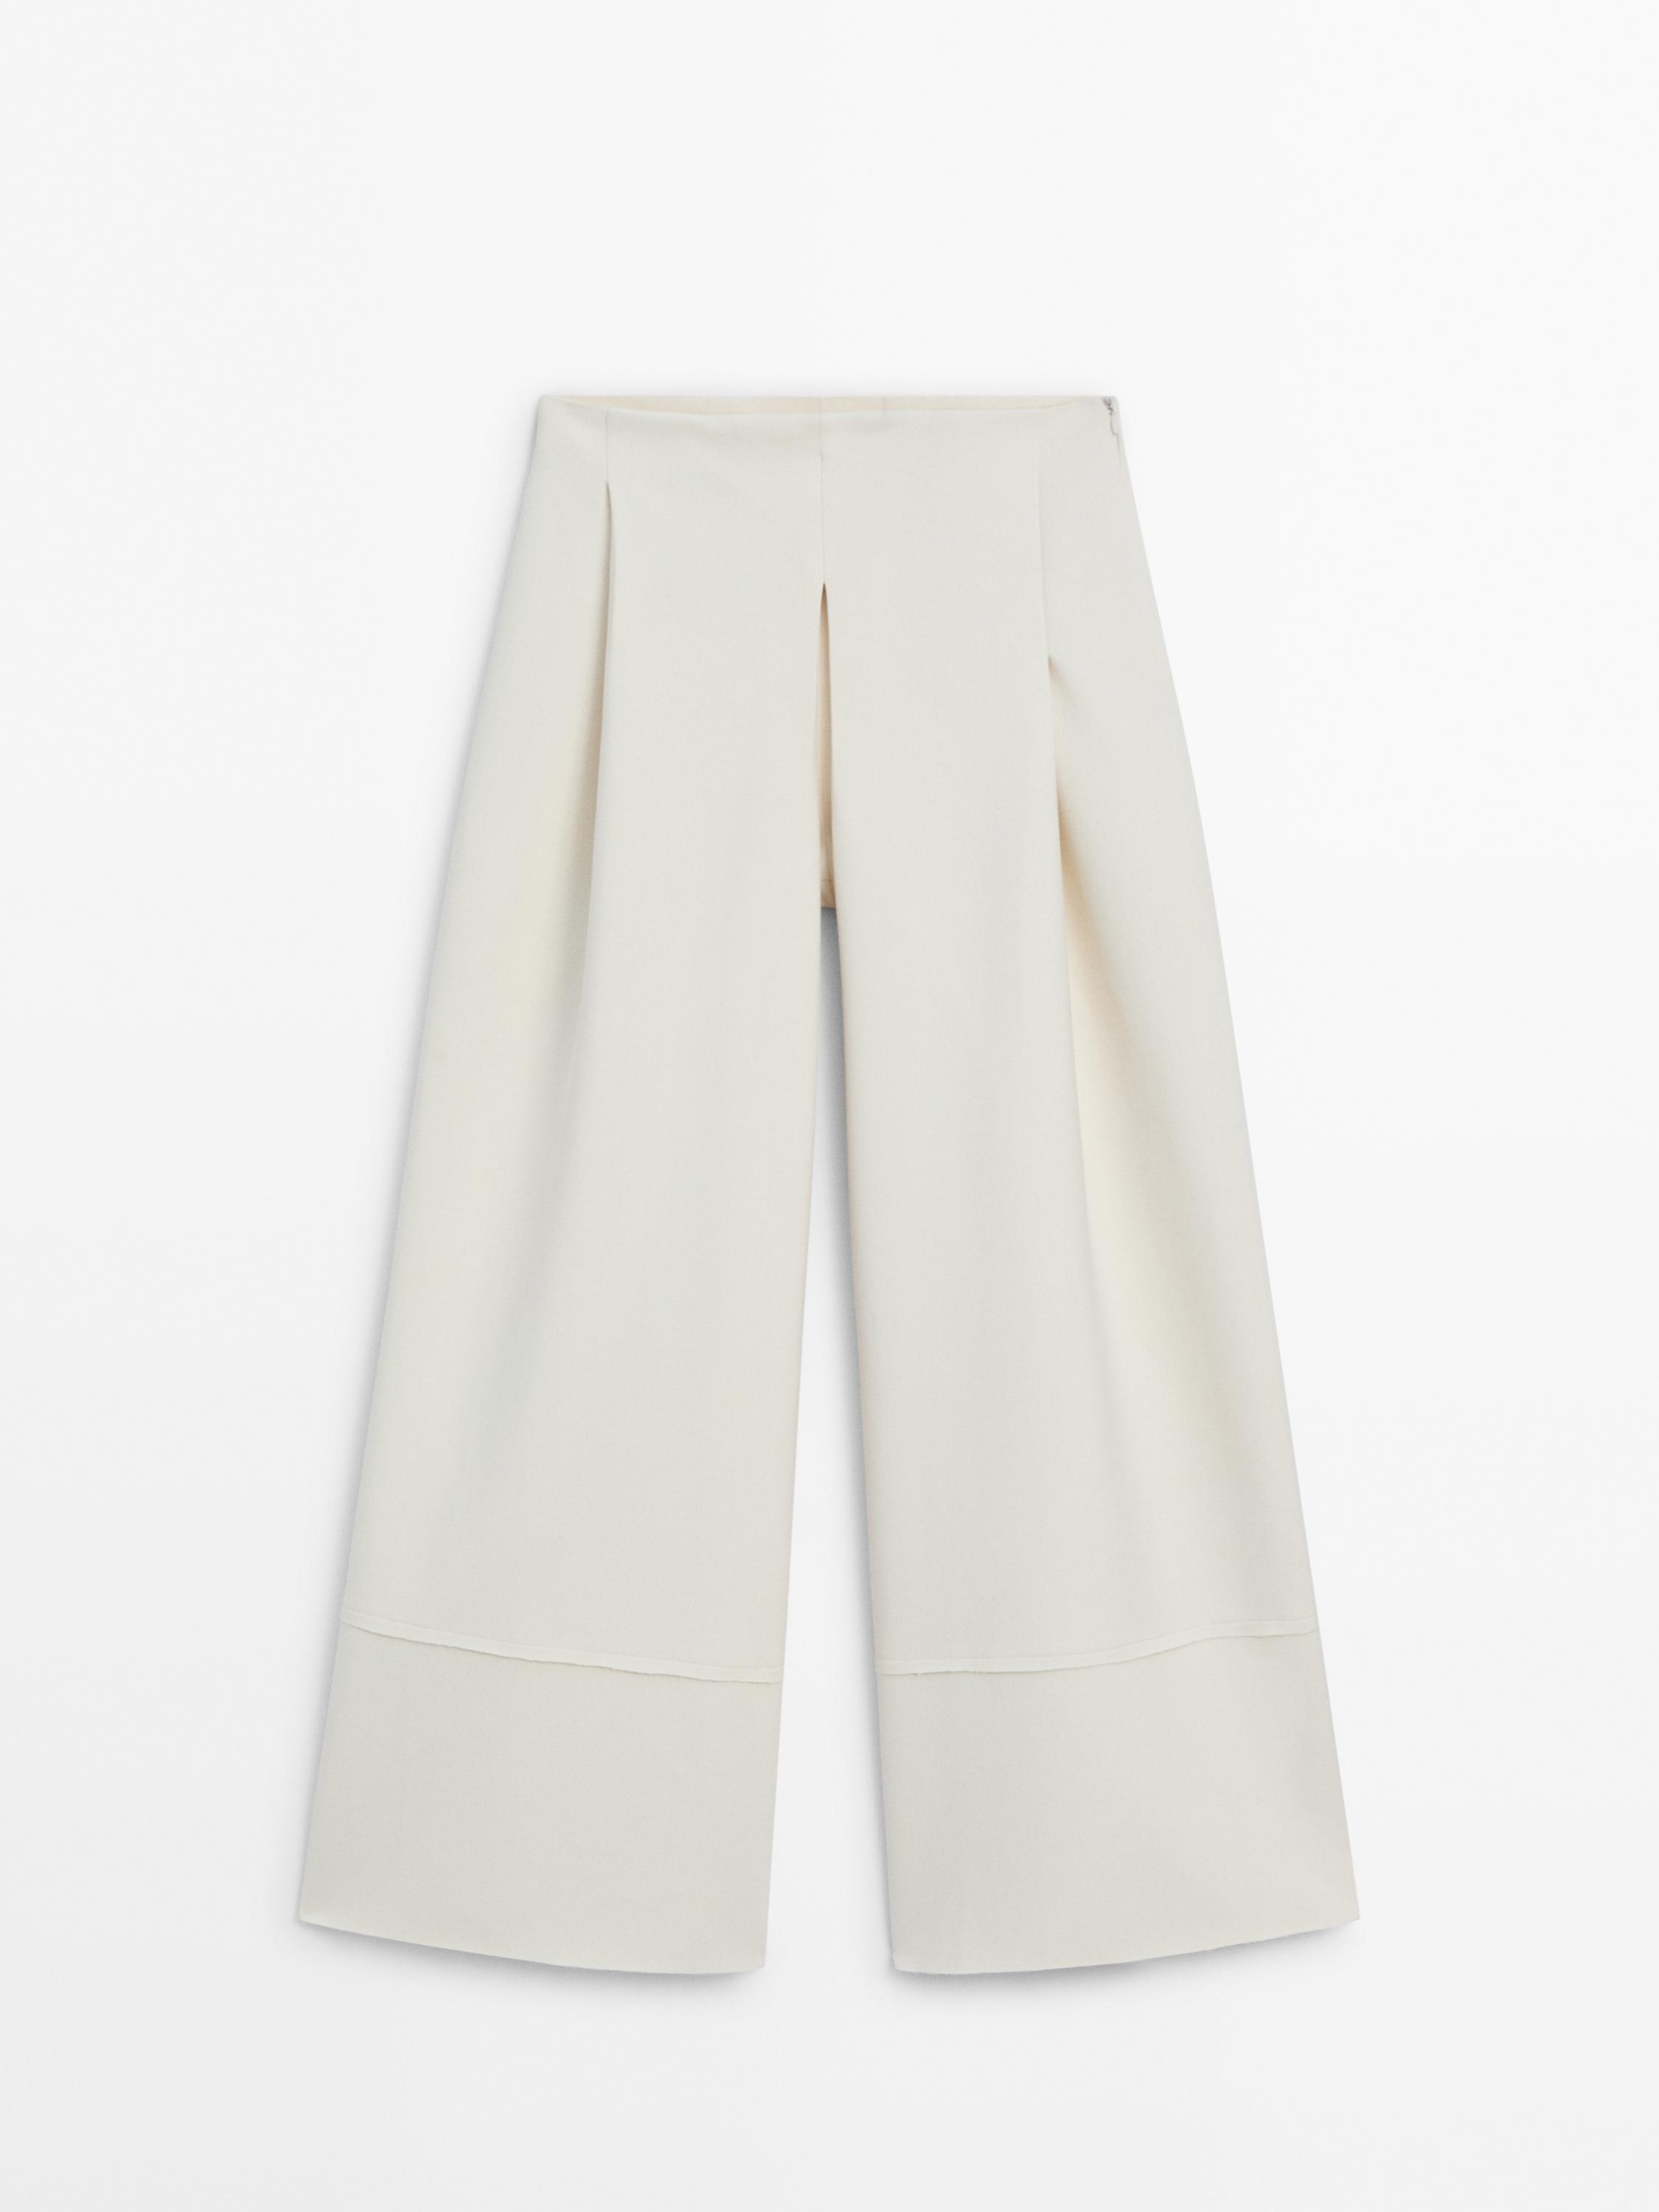 Wide-leg trousers with darts and hem seam detail - Studio - Ecru 